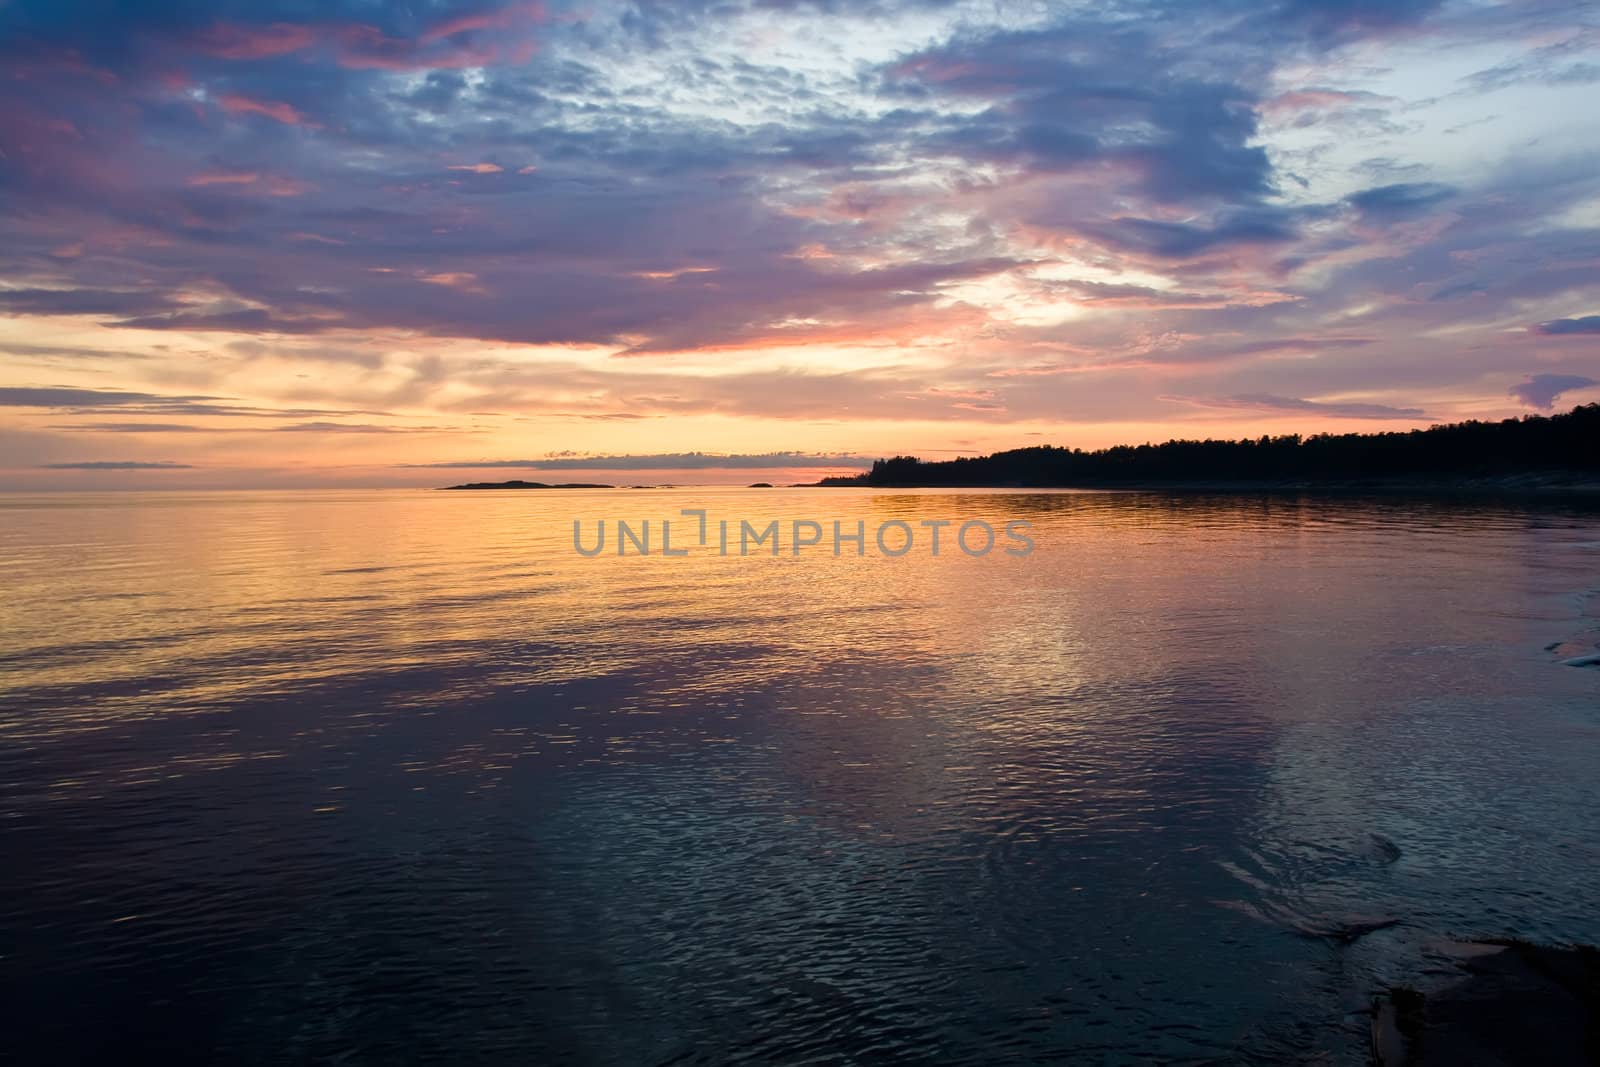 Sunset and white night at Kiy island, Russia